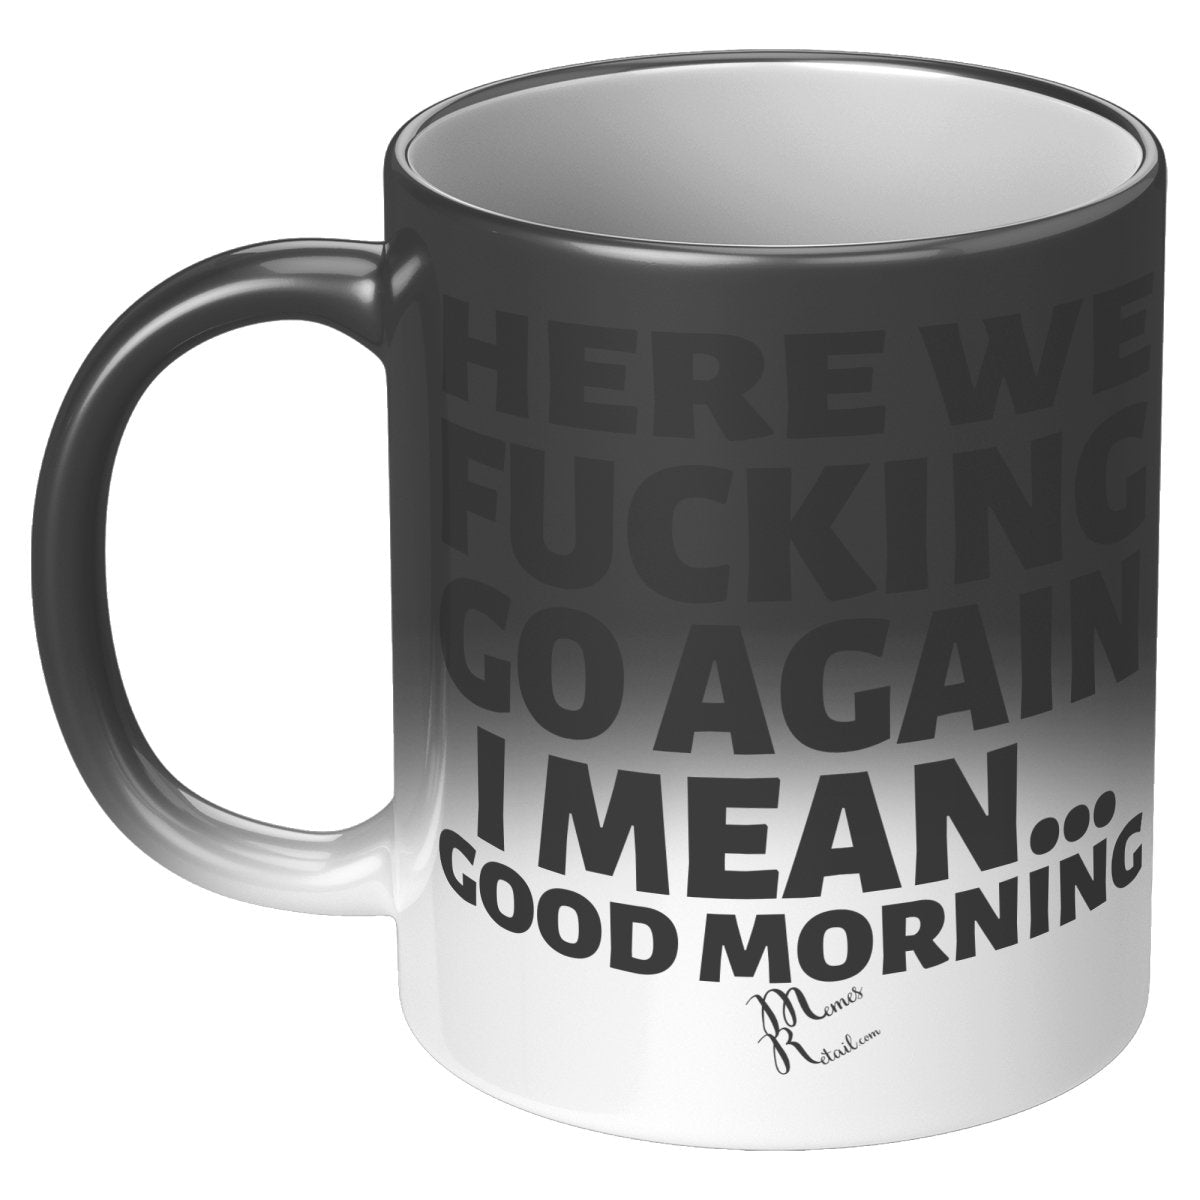 Here We Fucking Go Again, I mean...good morning - Big Lettering Mugs, 11oz / Magic Mug - MemesRetail.com